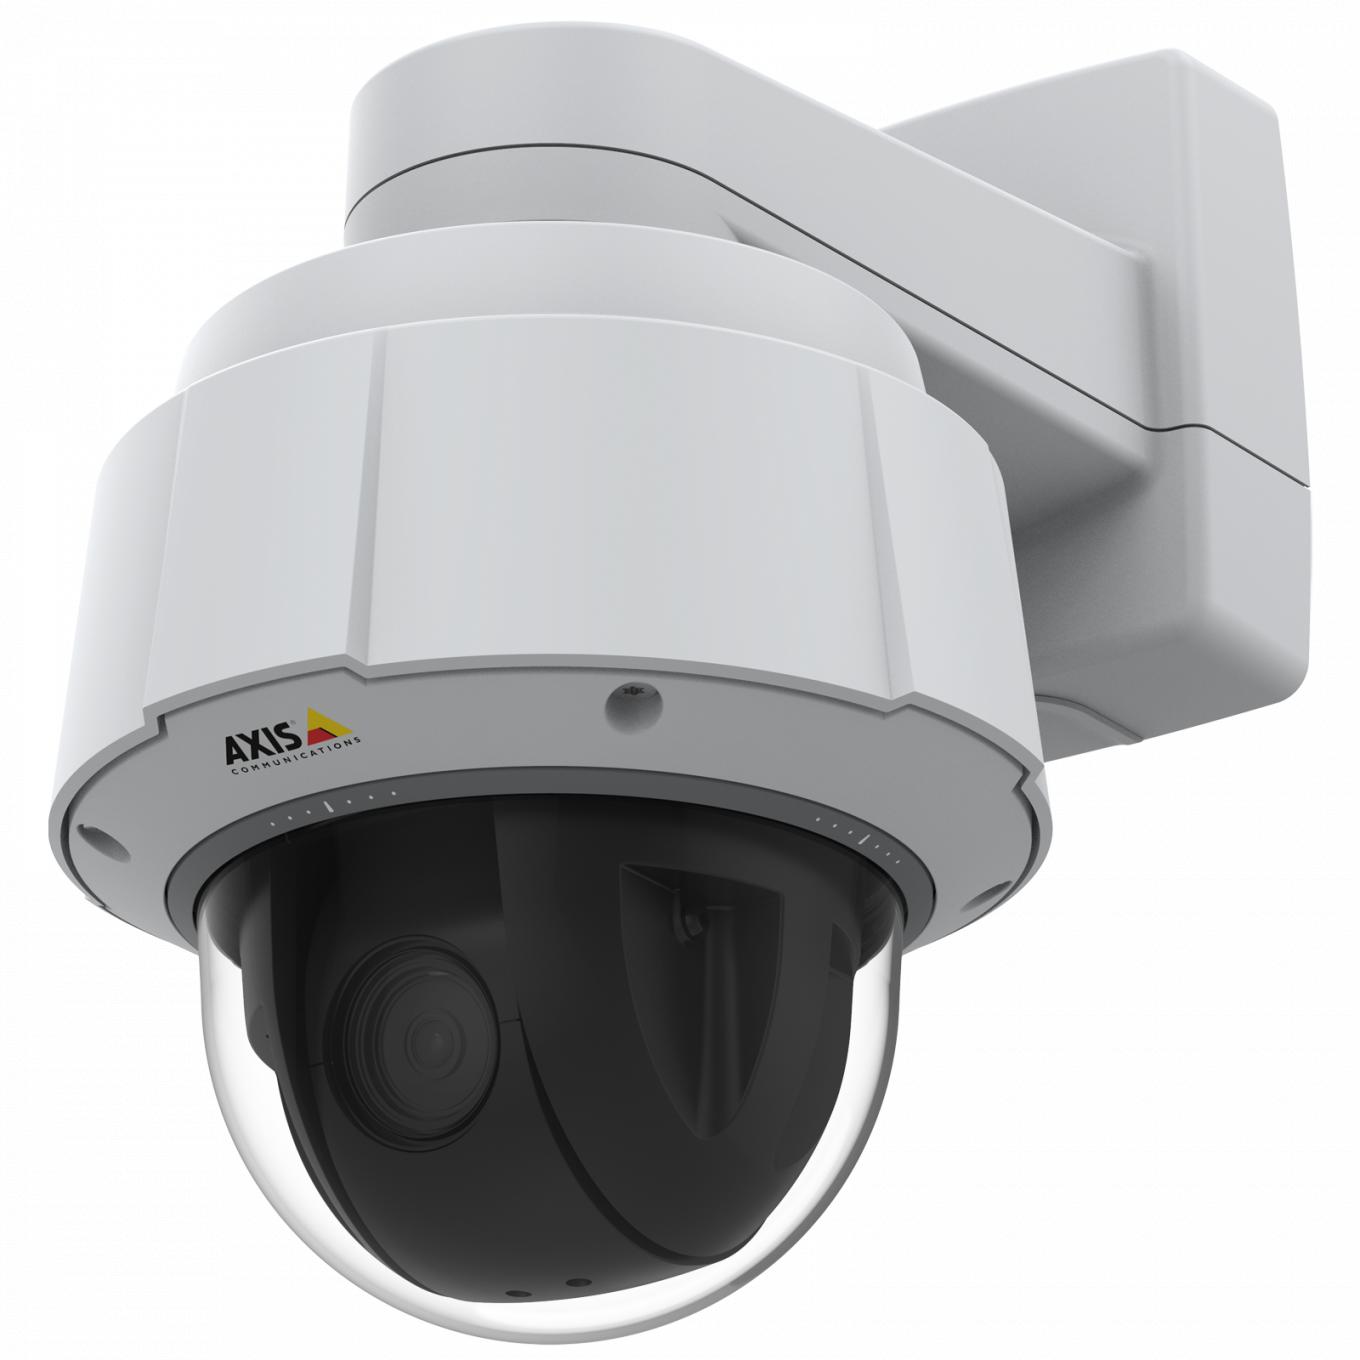 Axis IP Camera Q6075-E는 TPM, FIPS 140-2 level 2 인증을 받았습니다.